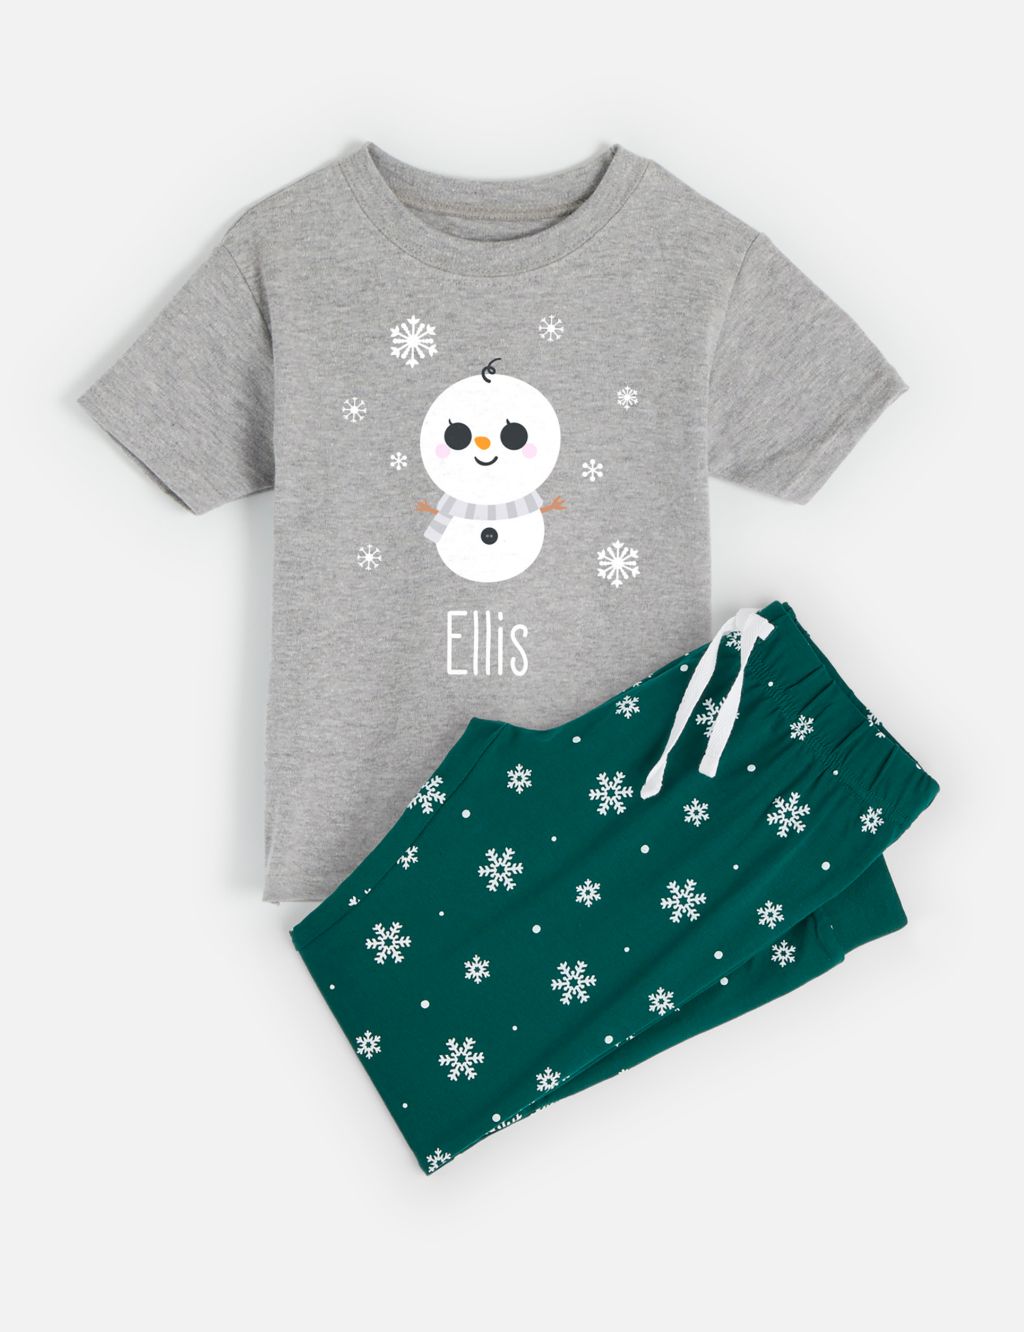 Personalised Snowman Toddler Pyjamas (12 Mths-4 Yrs) image 1